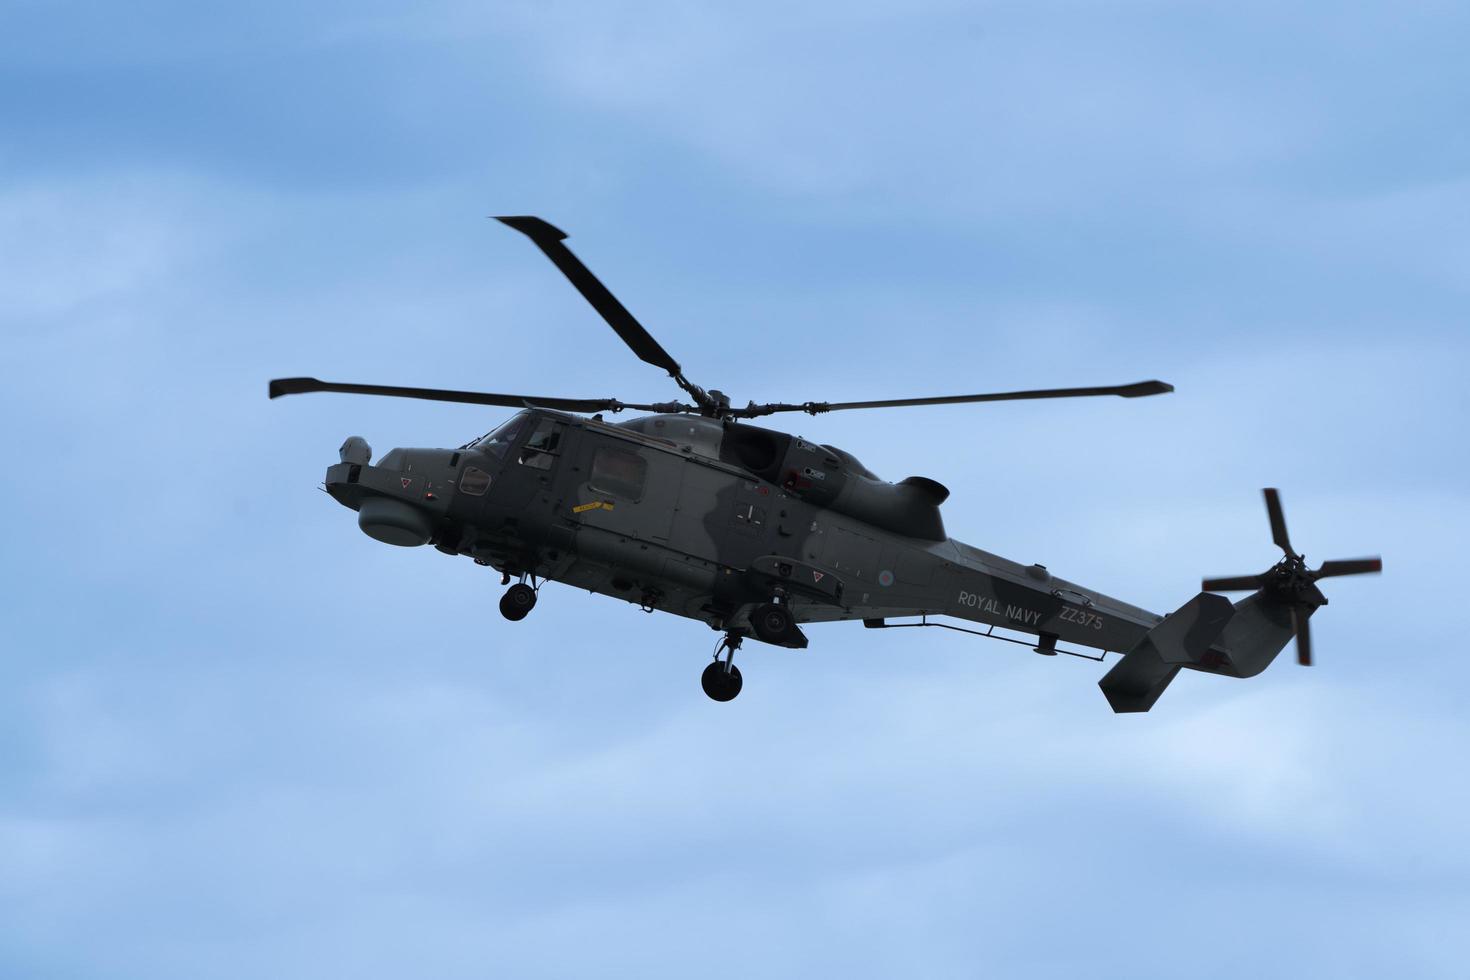 lynx wilde kat helikopter bournemouth lucht festival 2022 foto